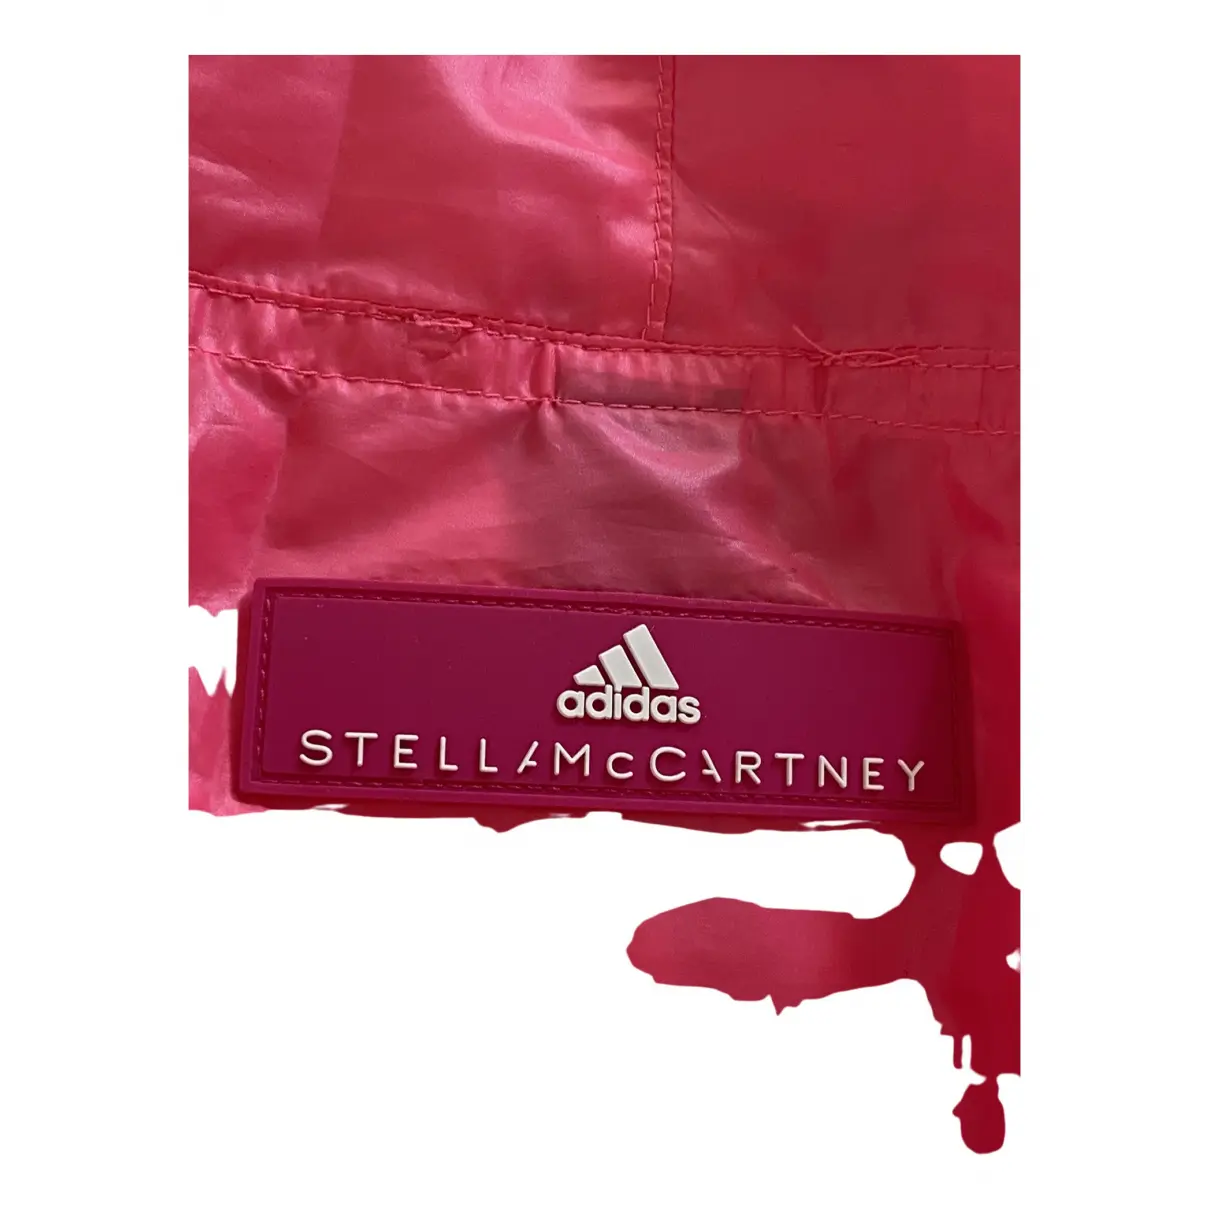 Buy Stella McCartney Top online